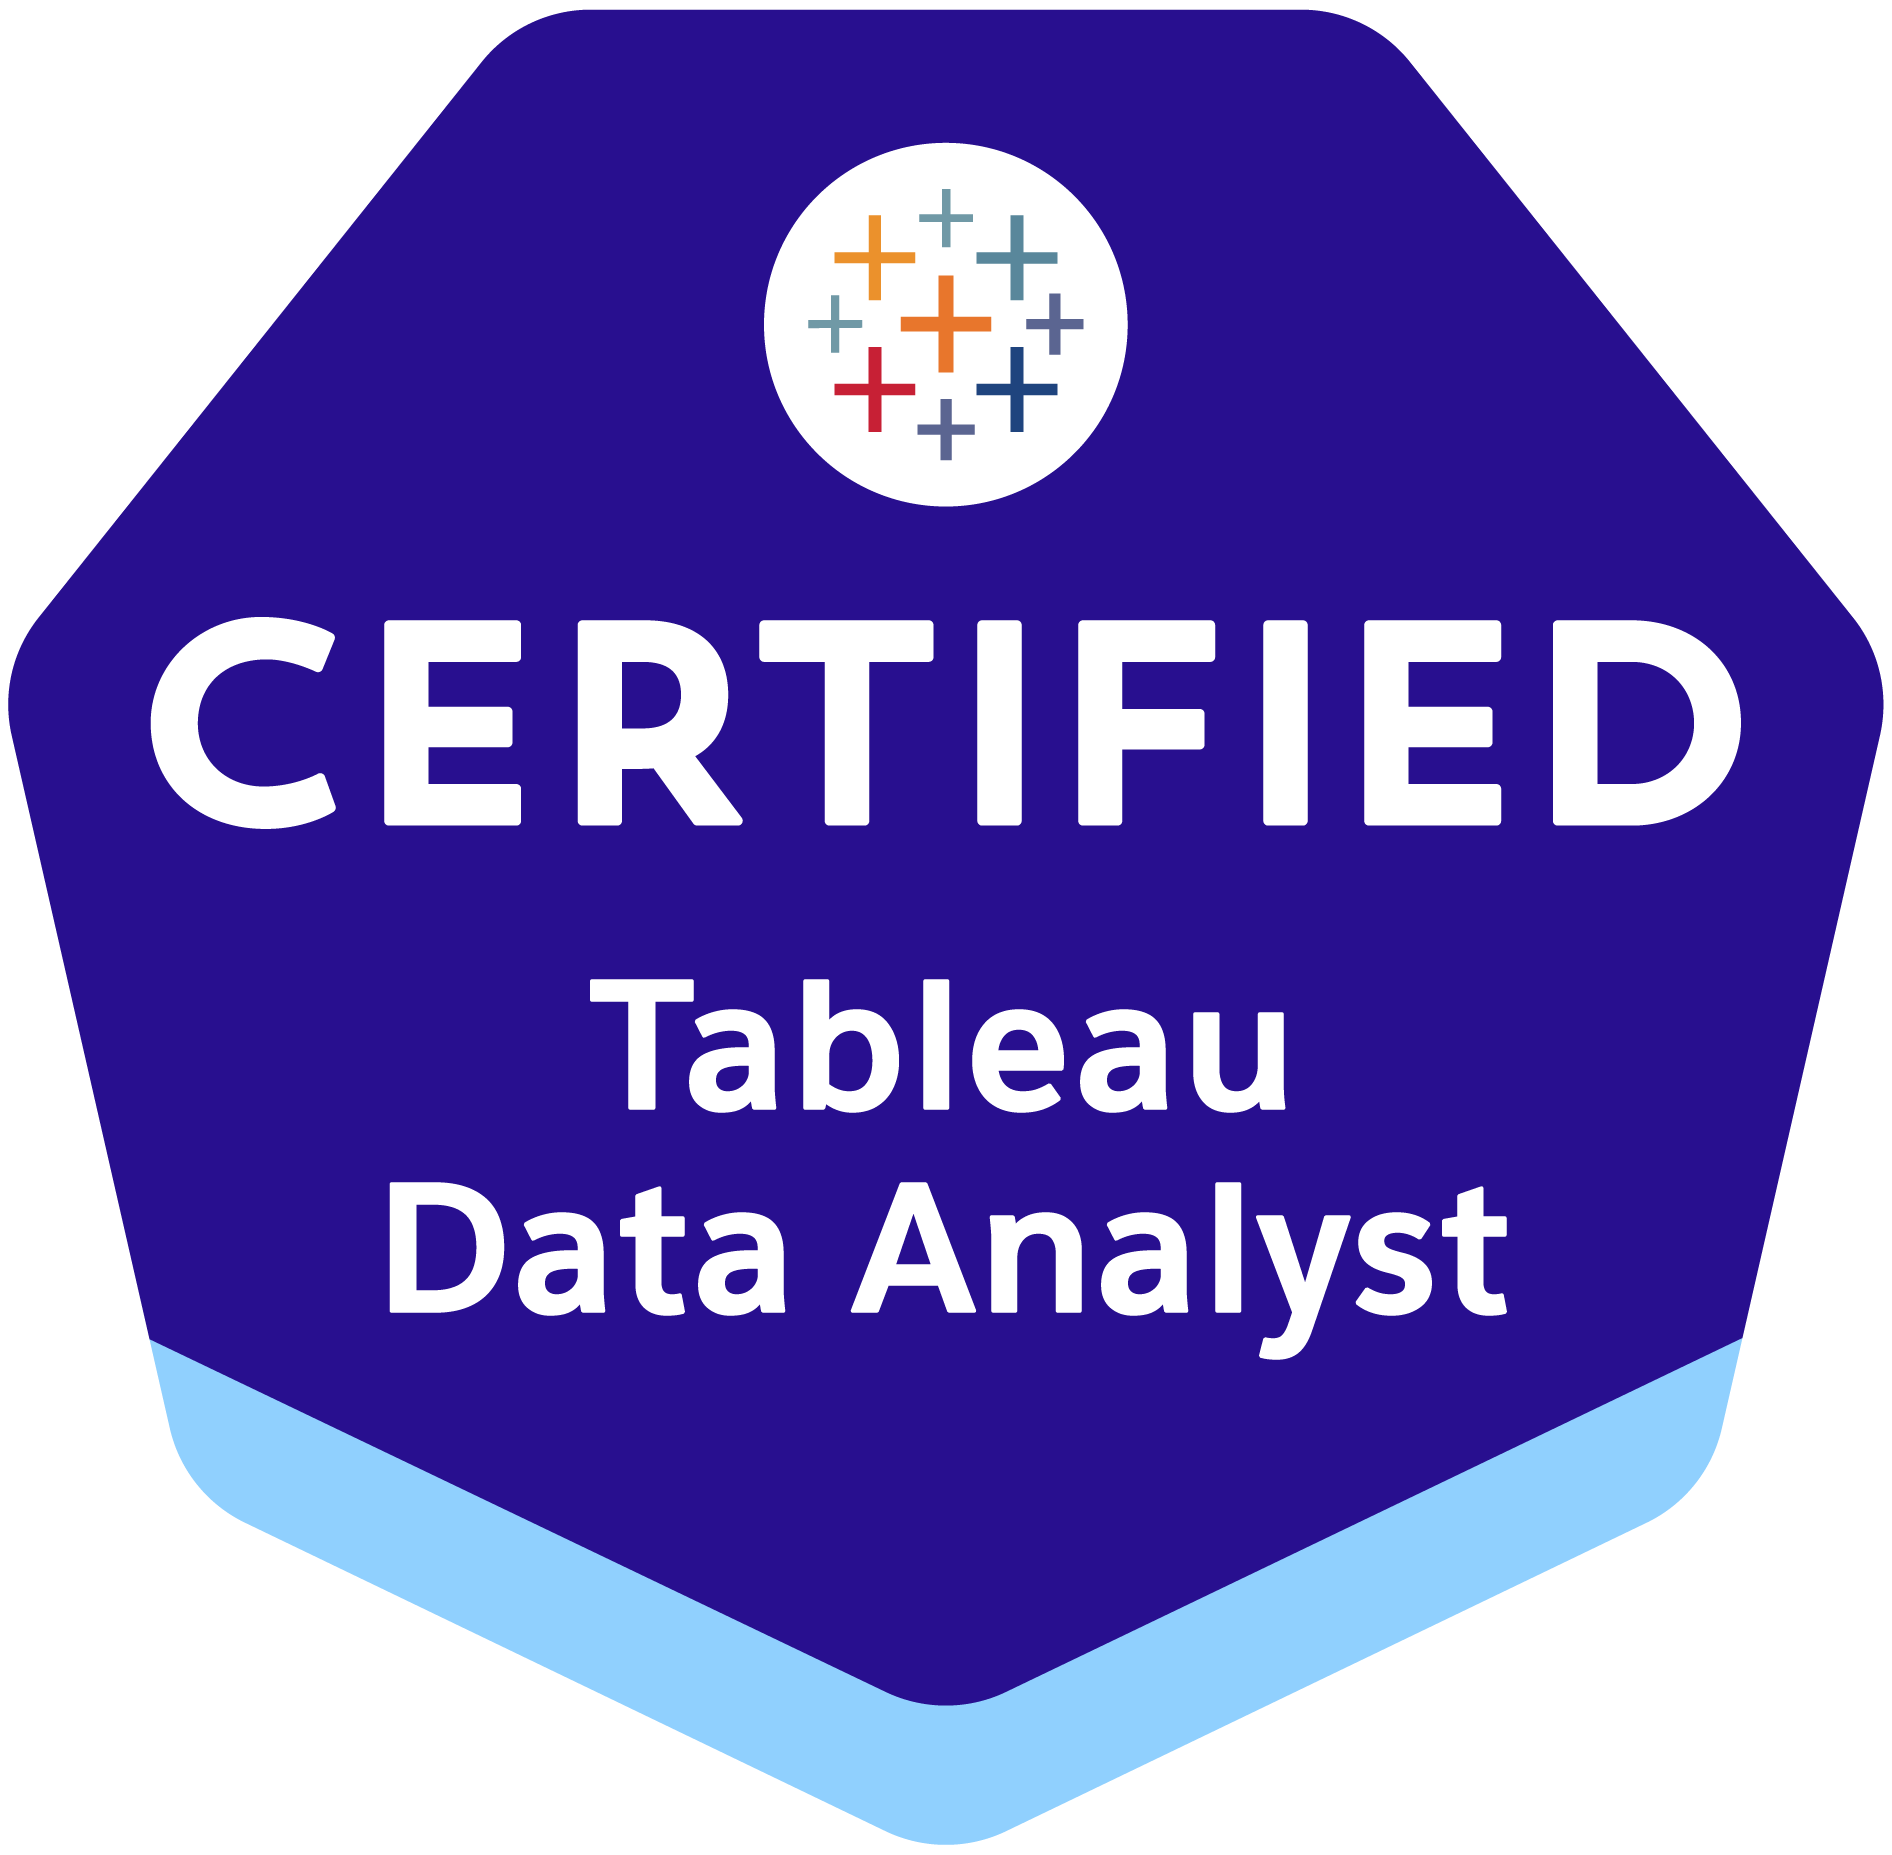 Certified Tableau Data Analyst